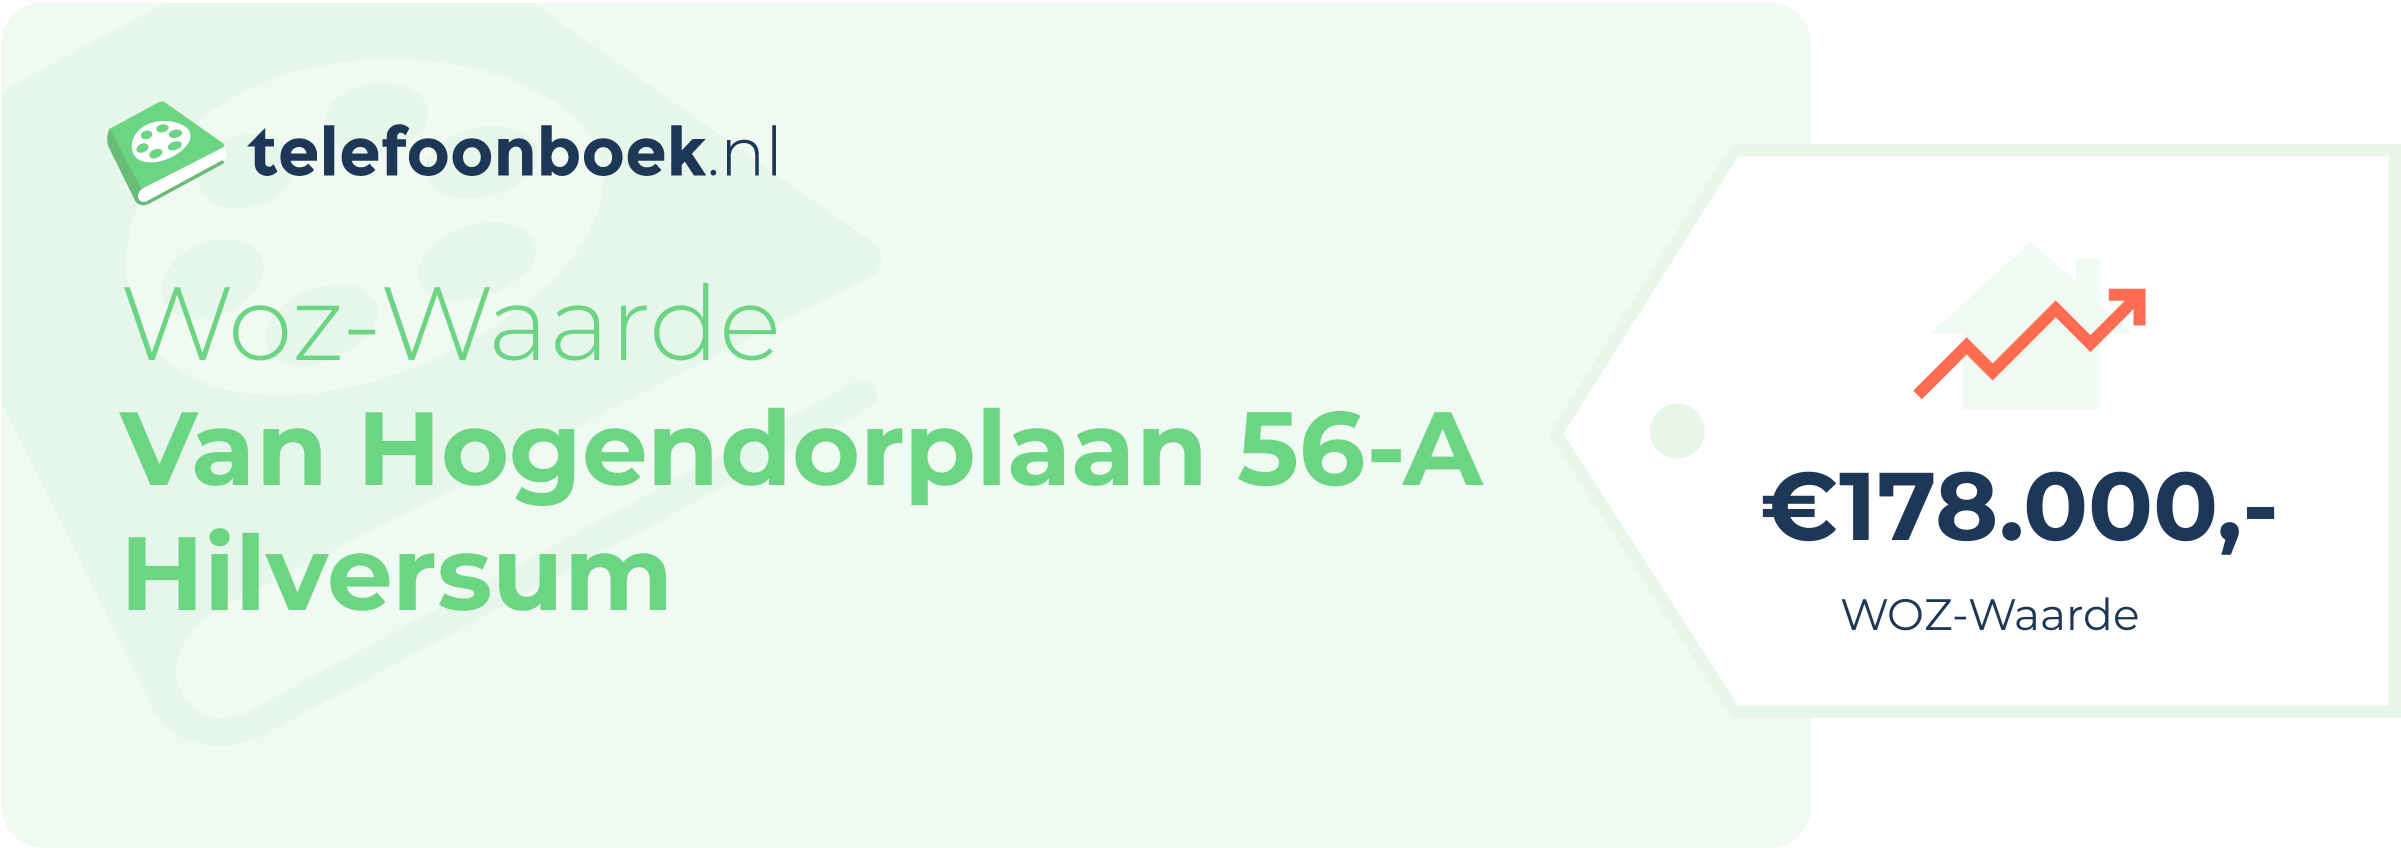 WOZ-waarde Van Hogendorplaan 56-A Hilversum